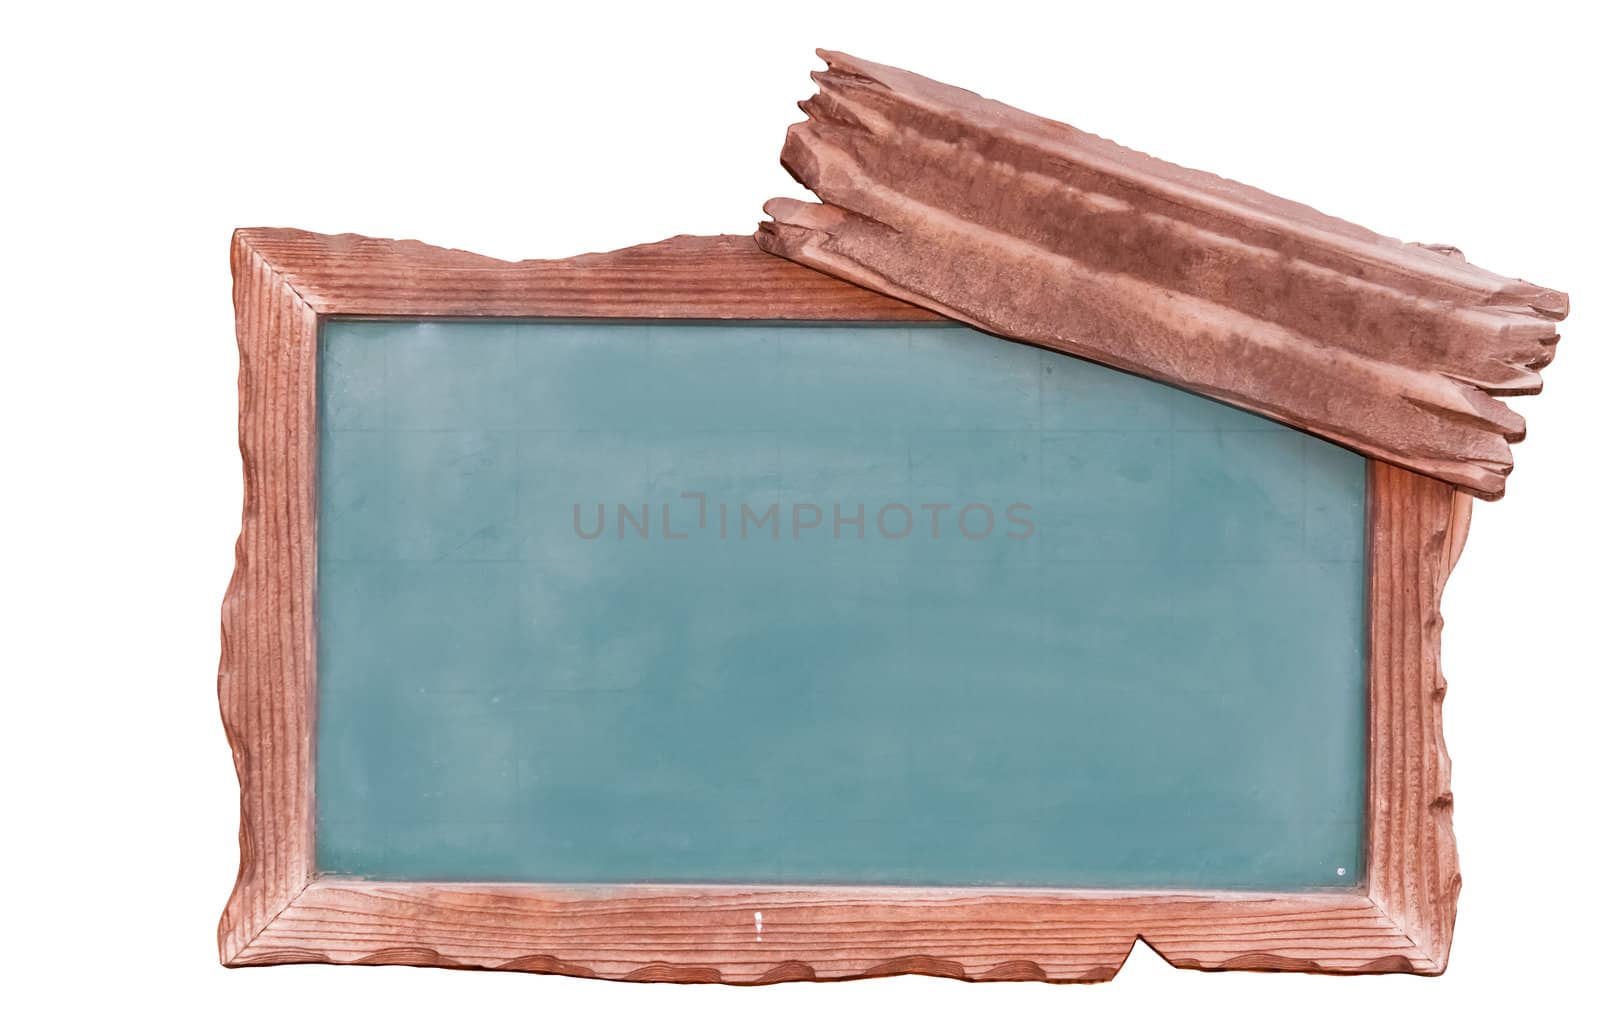 empty blackboard with wooden frame by Suriyaphoto